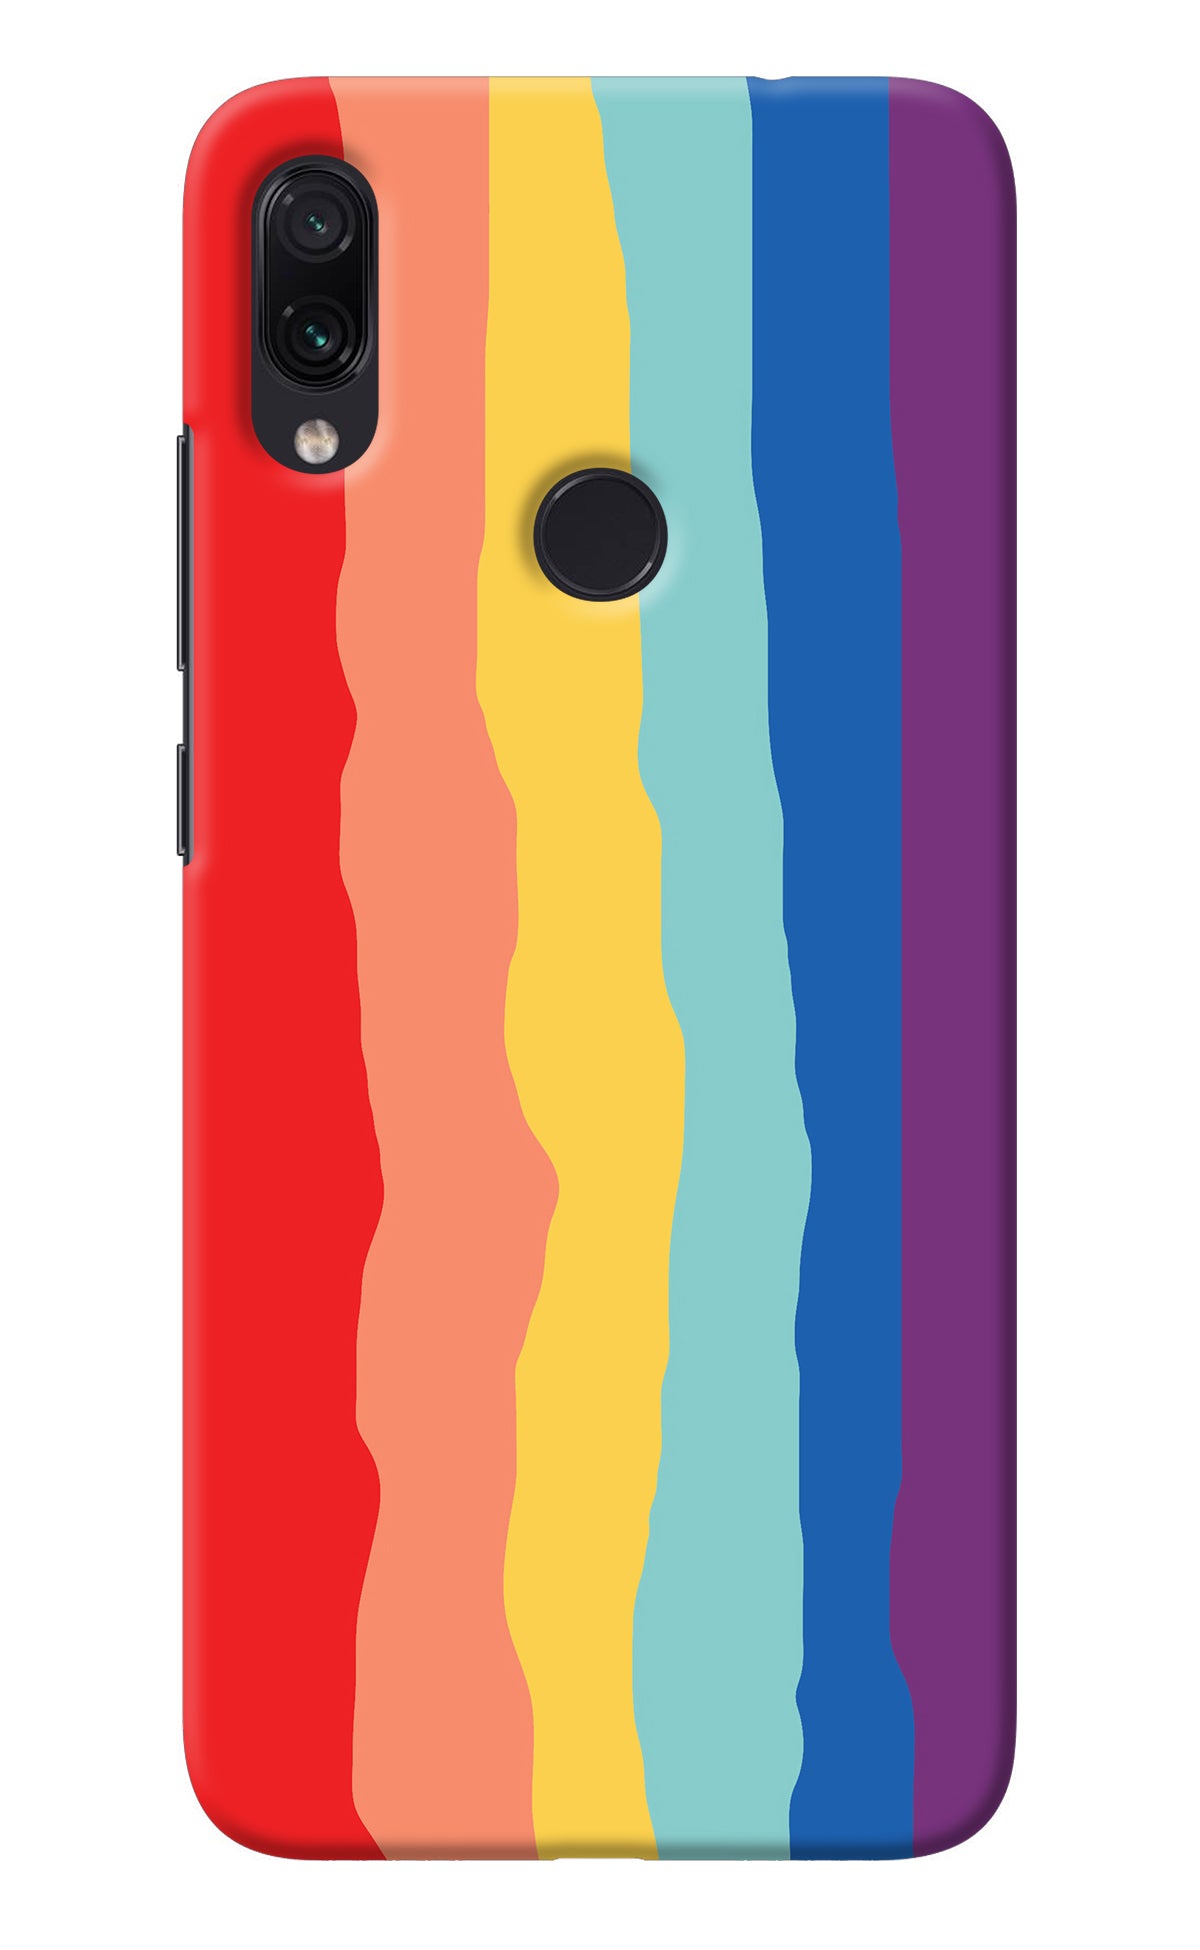 Rainbow Redmi Note 7/7S/7 Pro Back Cover